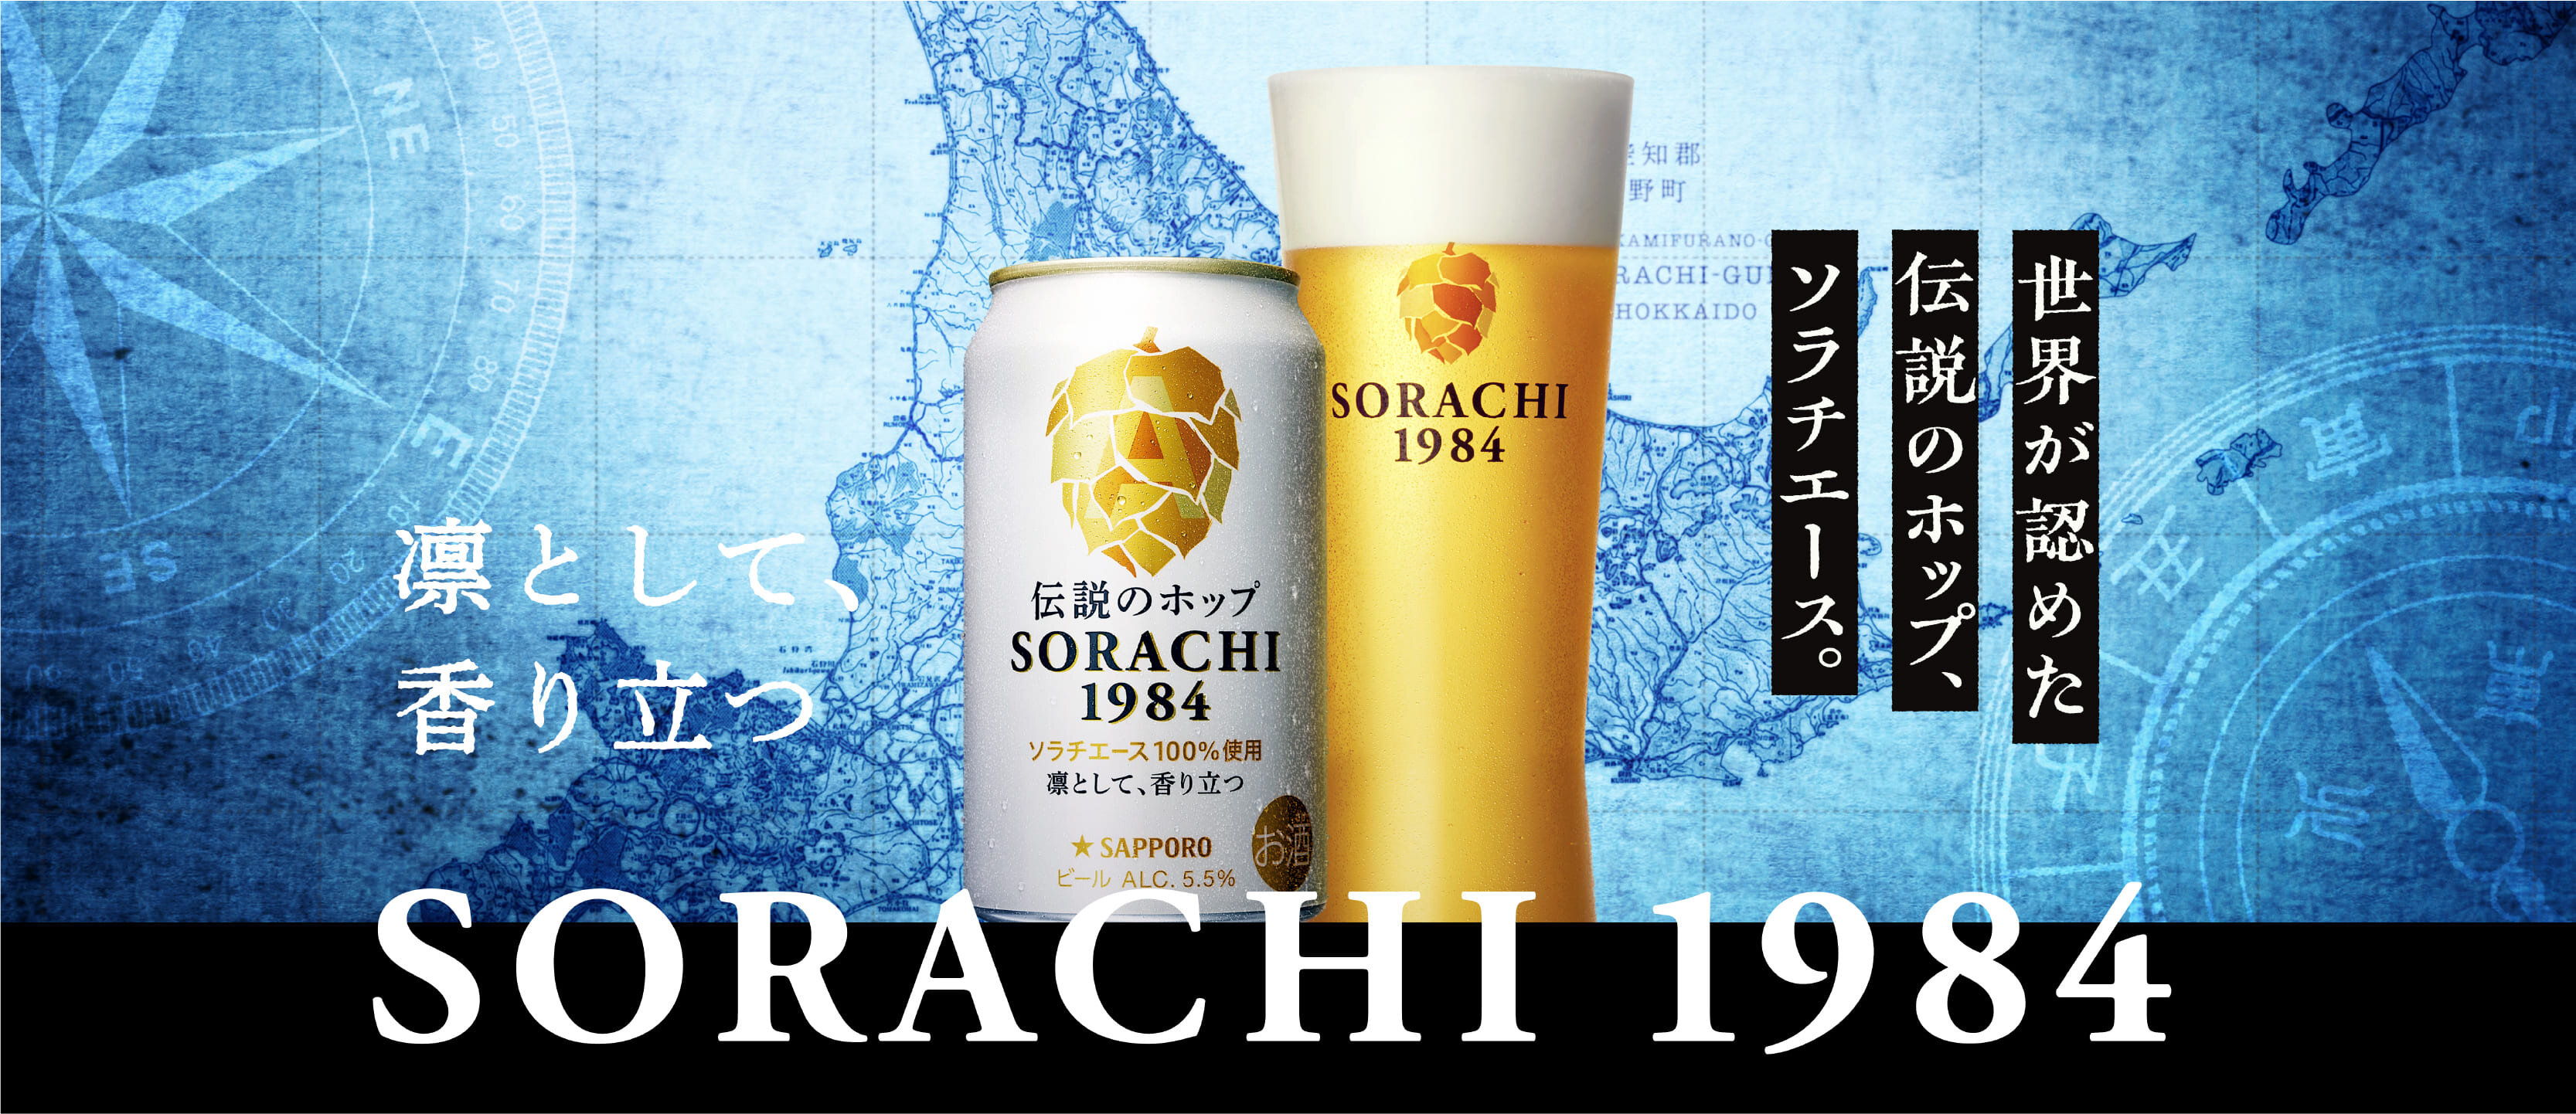 SORACHI1984ブランドメッセージ